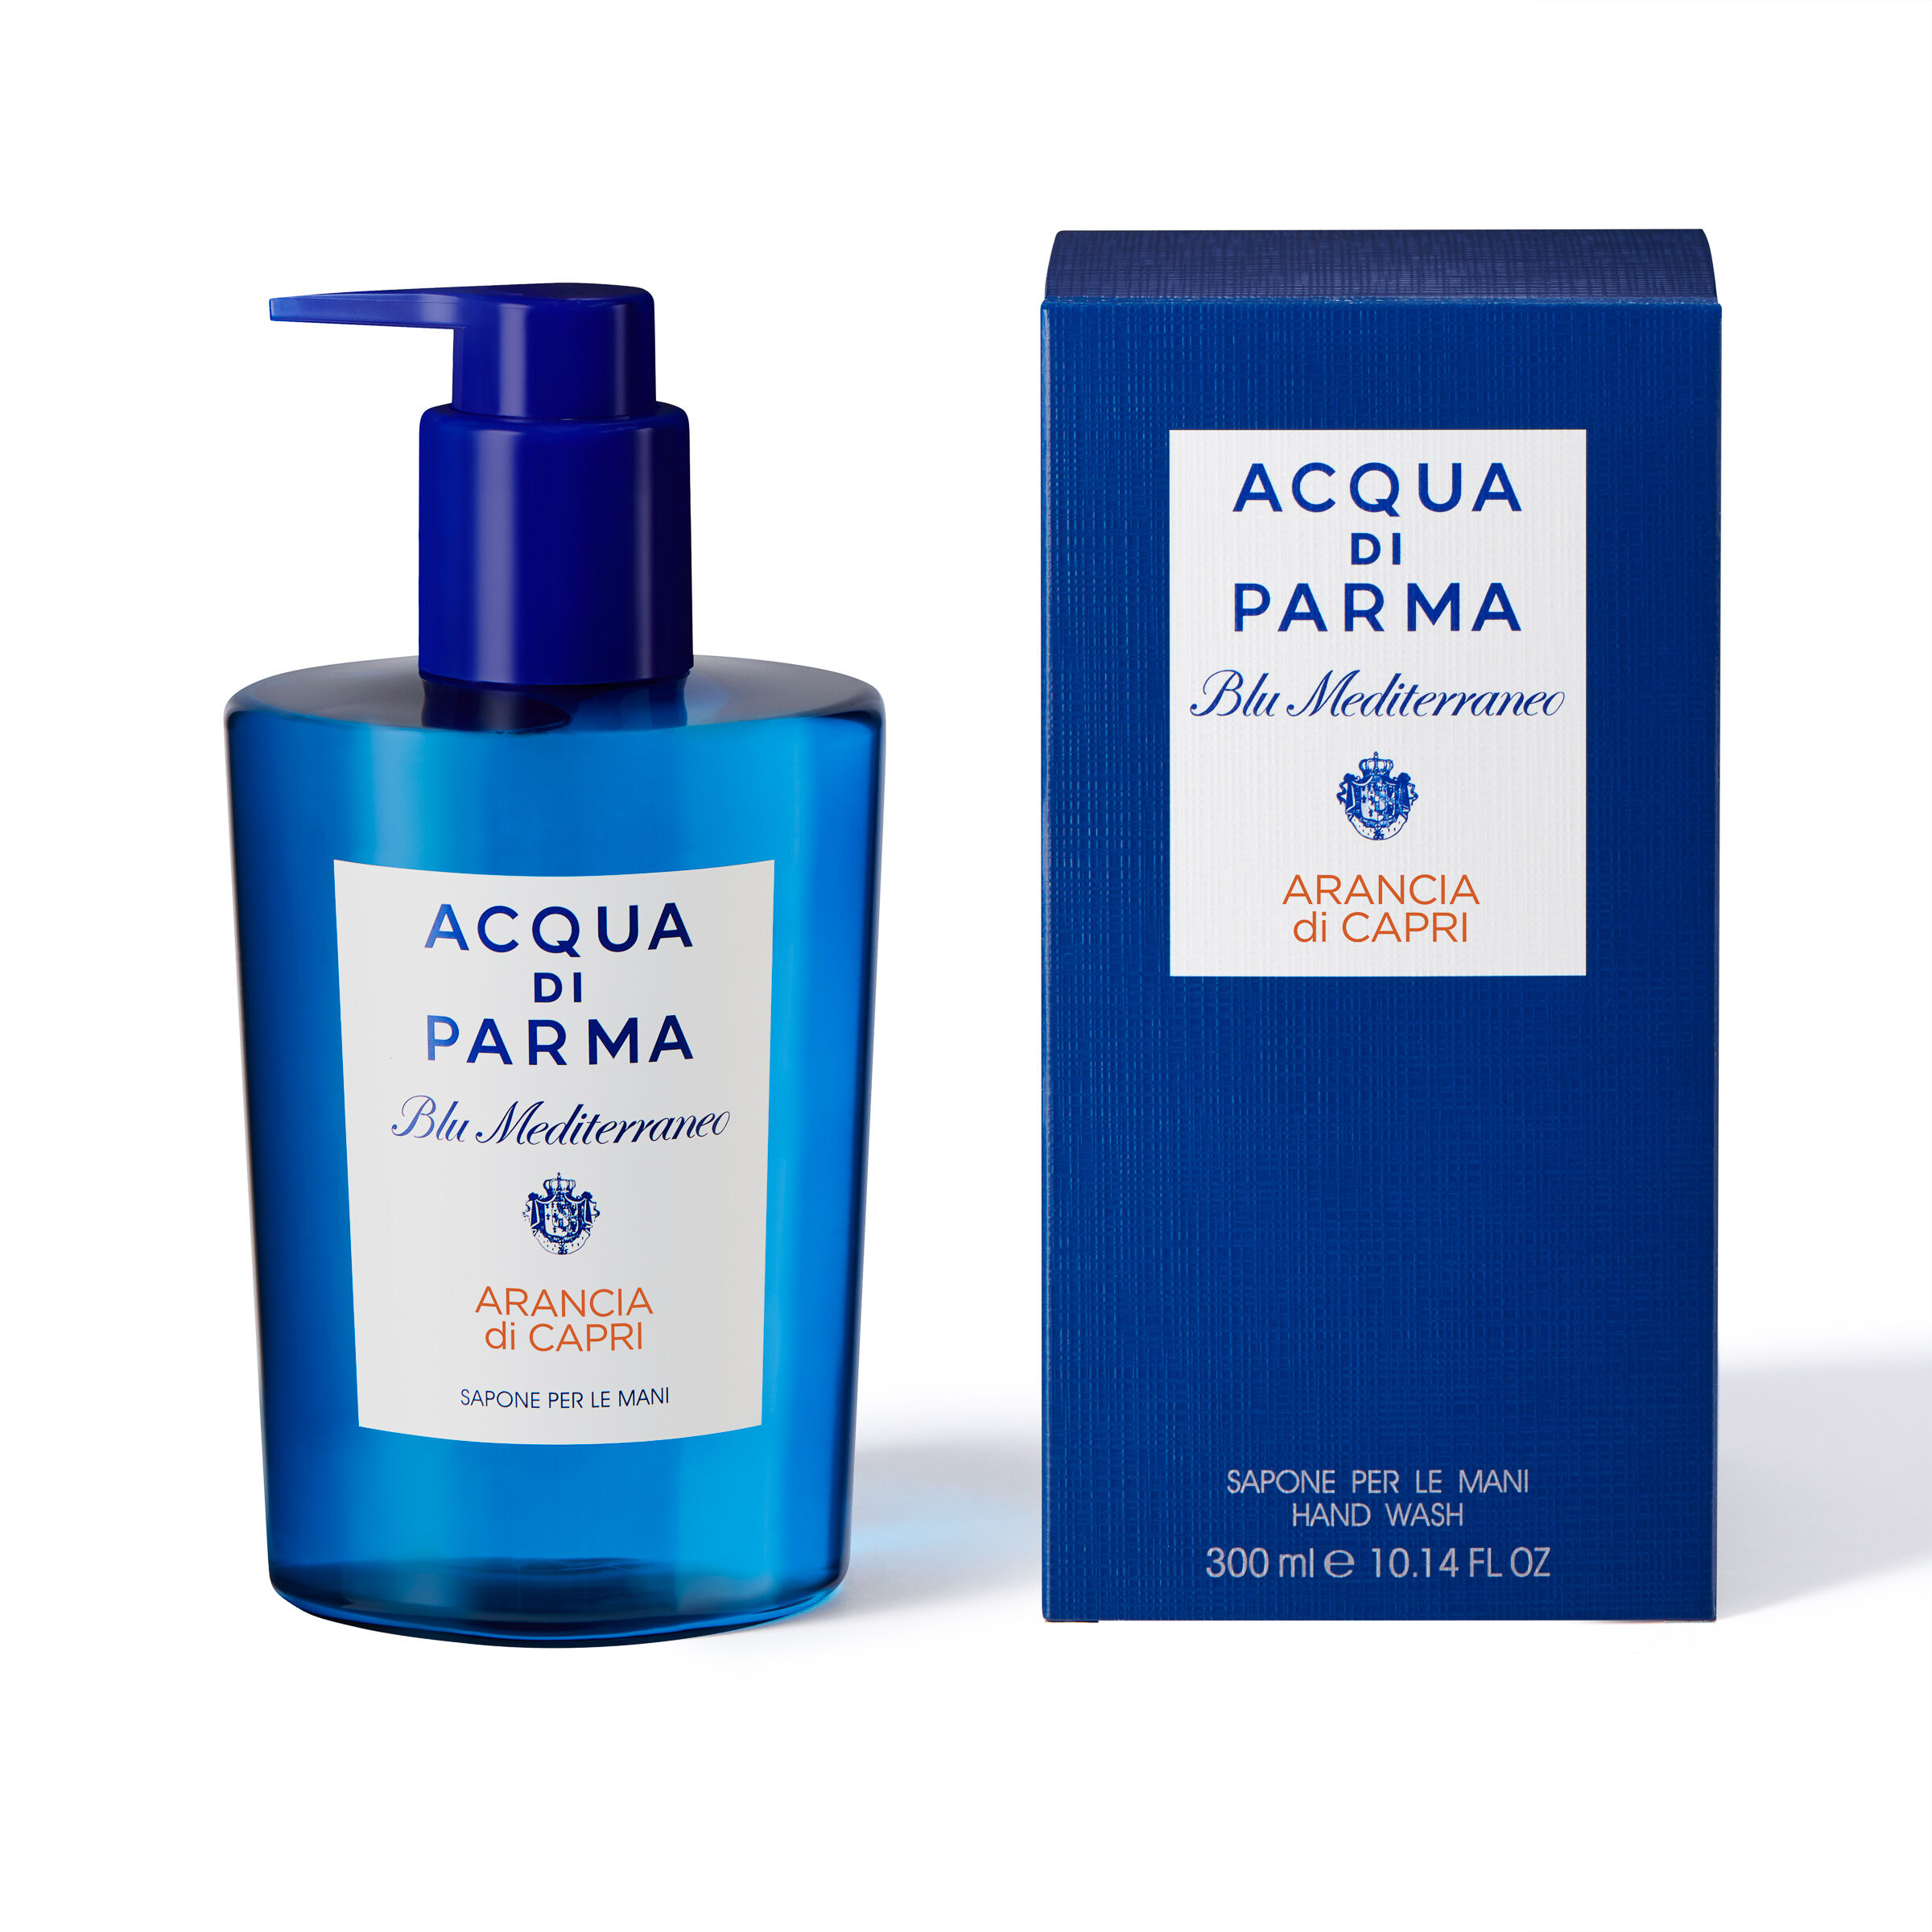 Acqua di parma arancia. Acqua di Parma мыло для рук.